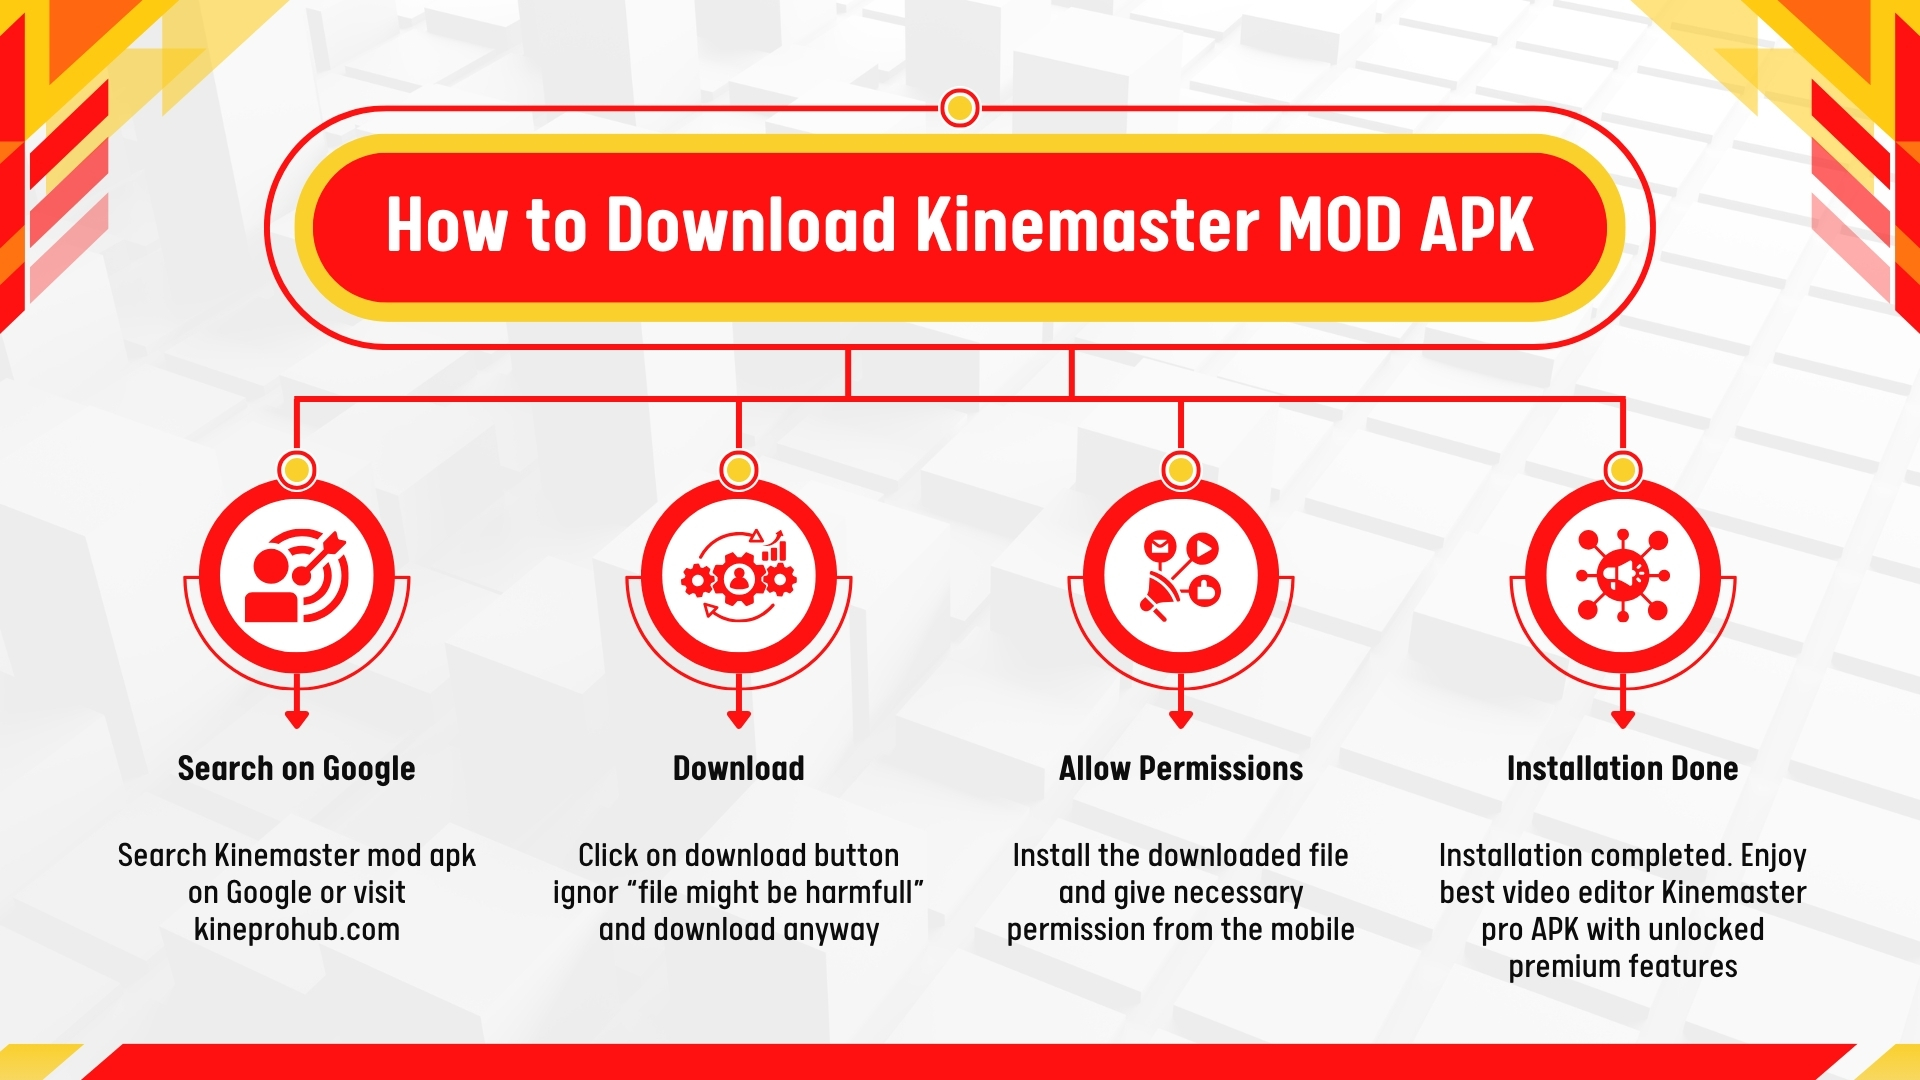 How to Download Kinemaster mod apk